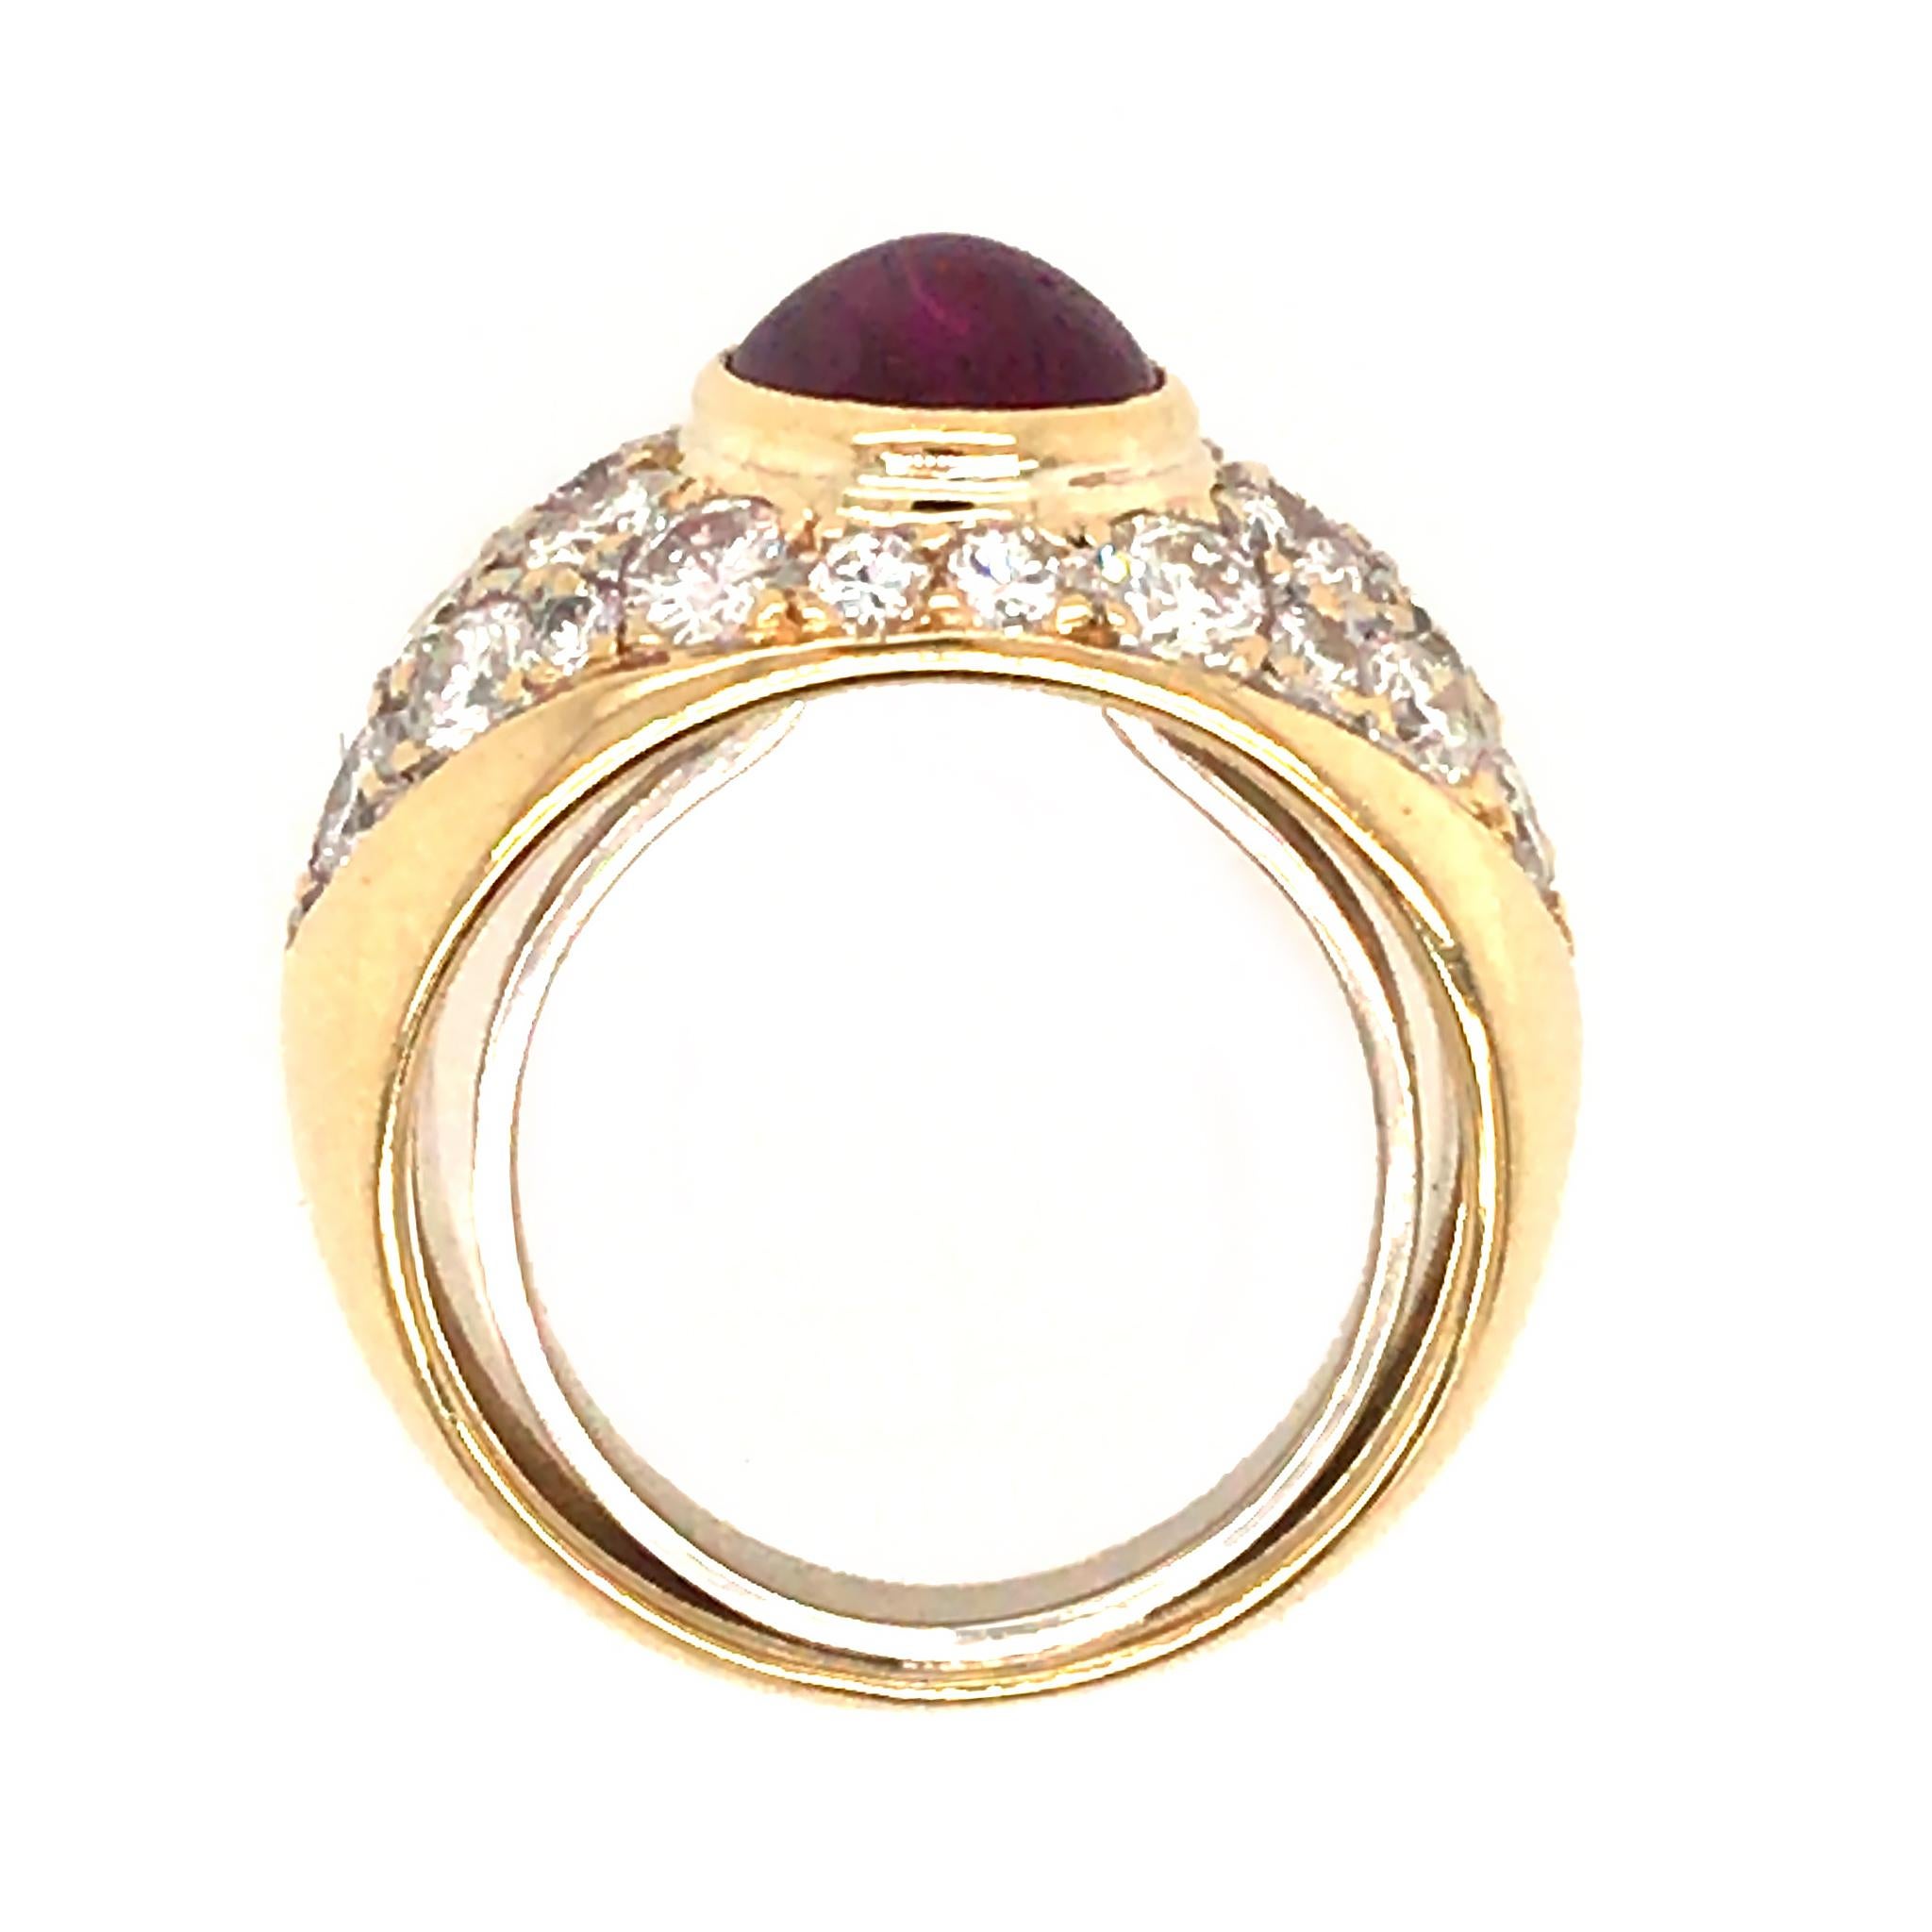 18k Yellow Gold
Diamond: 2.00 ct twd (estimated)
Ruby: 2.00 tcw (estimated)
Measurement: 7.1 mm x 6.6 mm x 4.8 mm
Origin: Sri-Lanka
Diamond Color: G-H
Diamond Clarity: VS1-SI1 
Total Weight: 9.9 grams
Ring Size: 4 (resizeable)